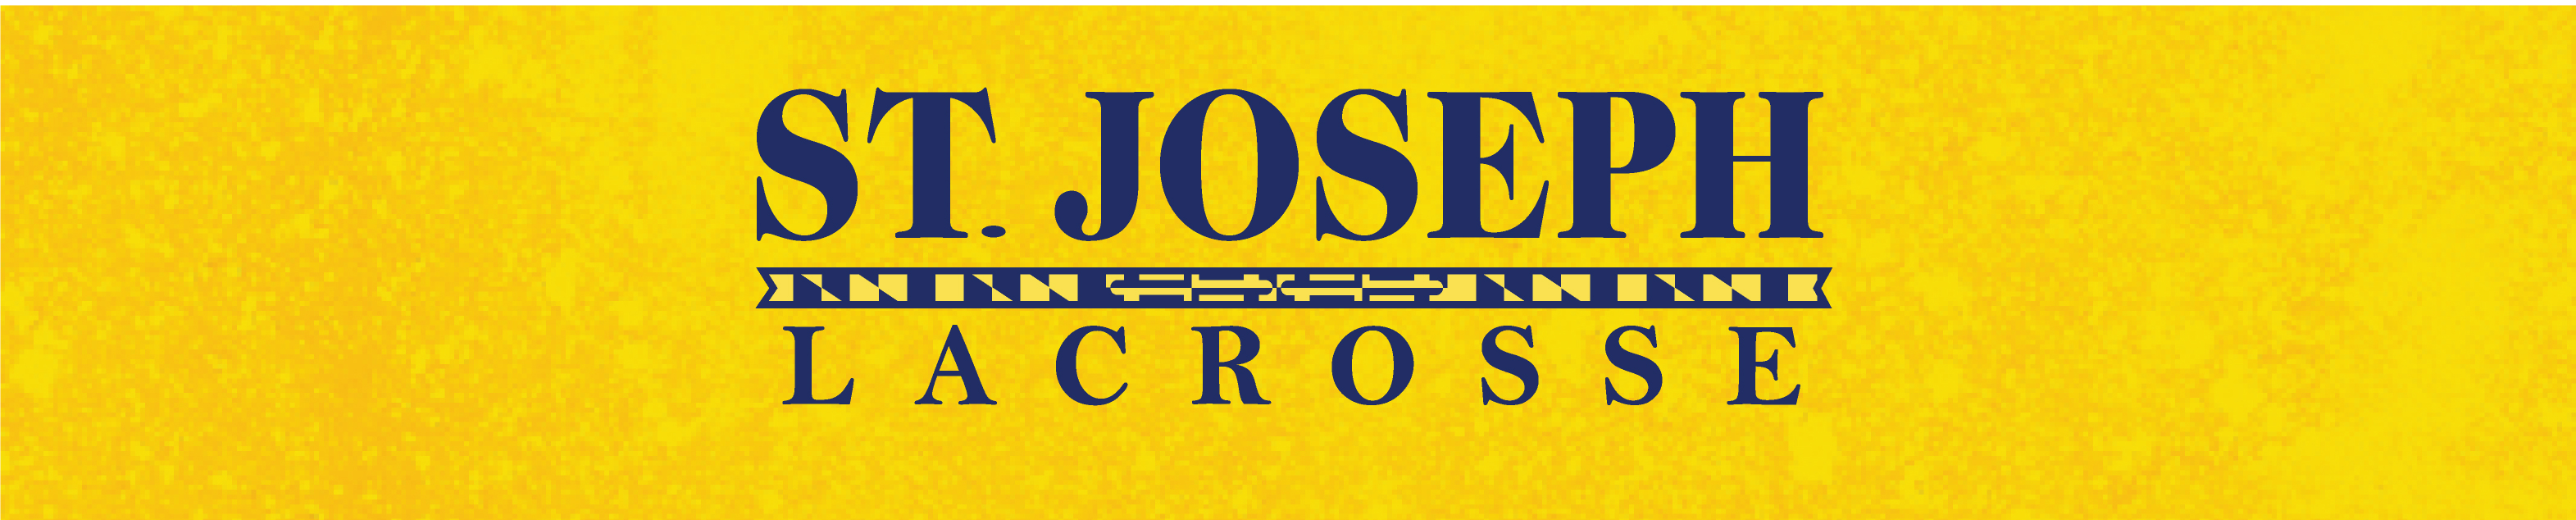 St Joseph Lacrosse